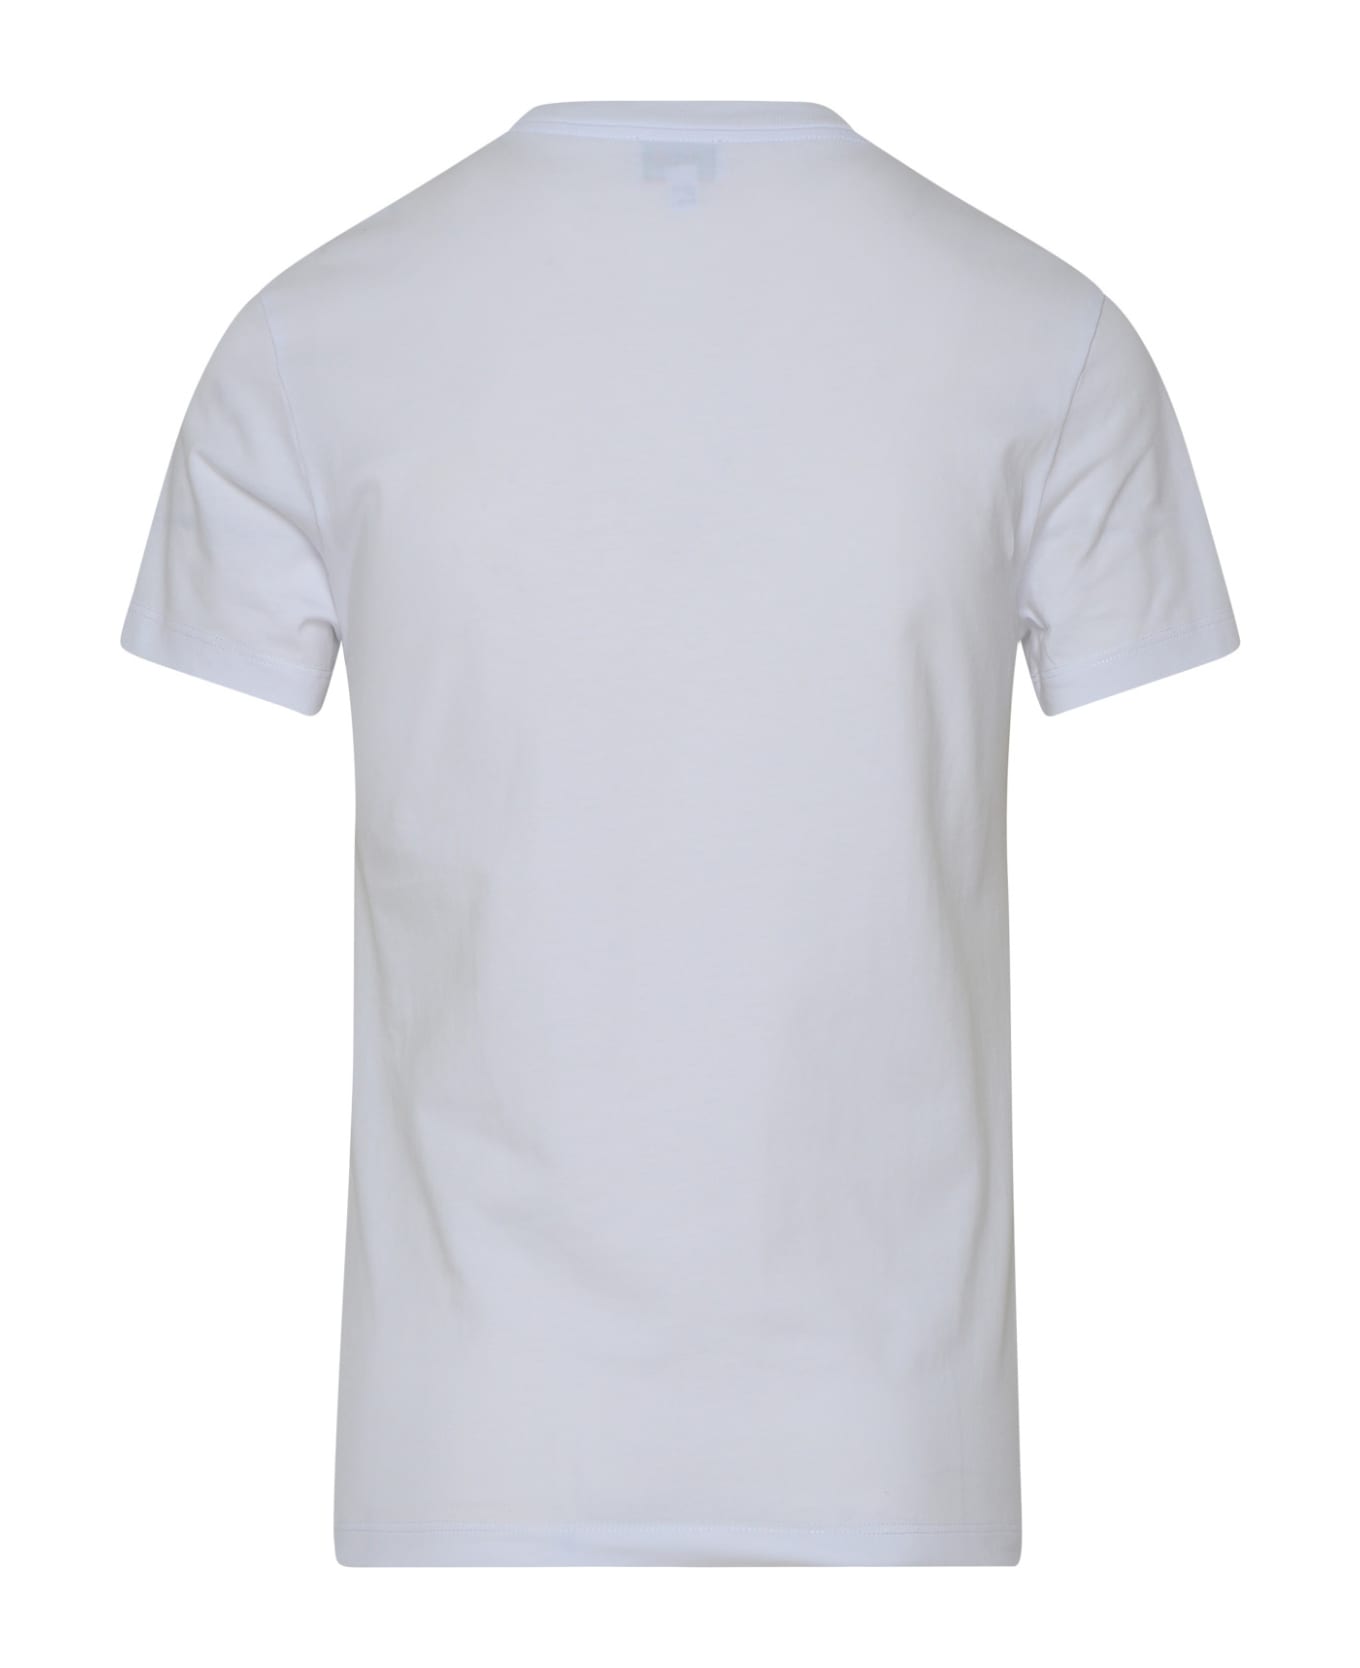 Kenzo Mini Logo T-shirt - Bianco